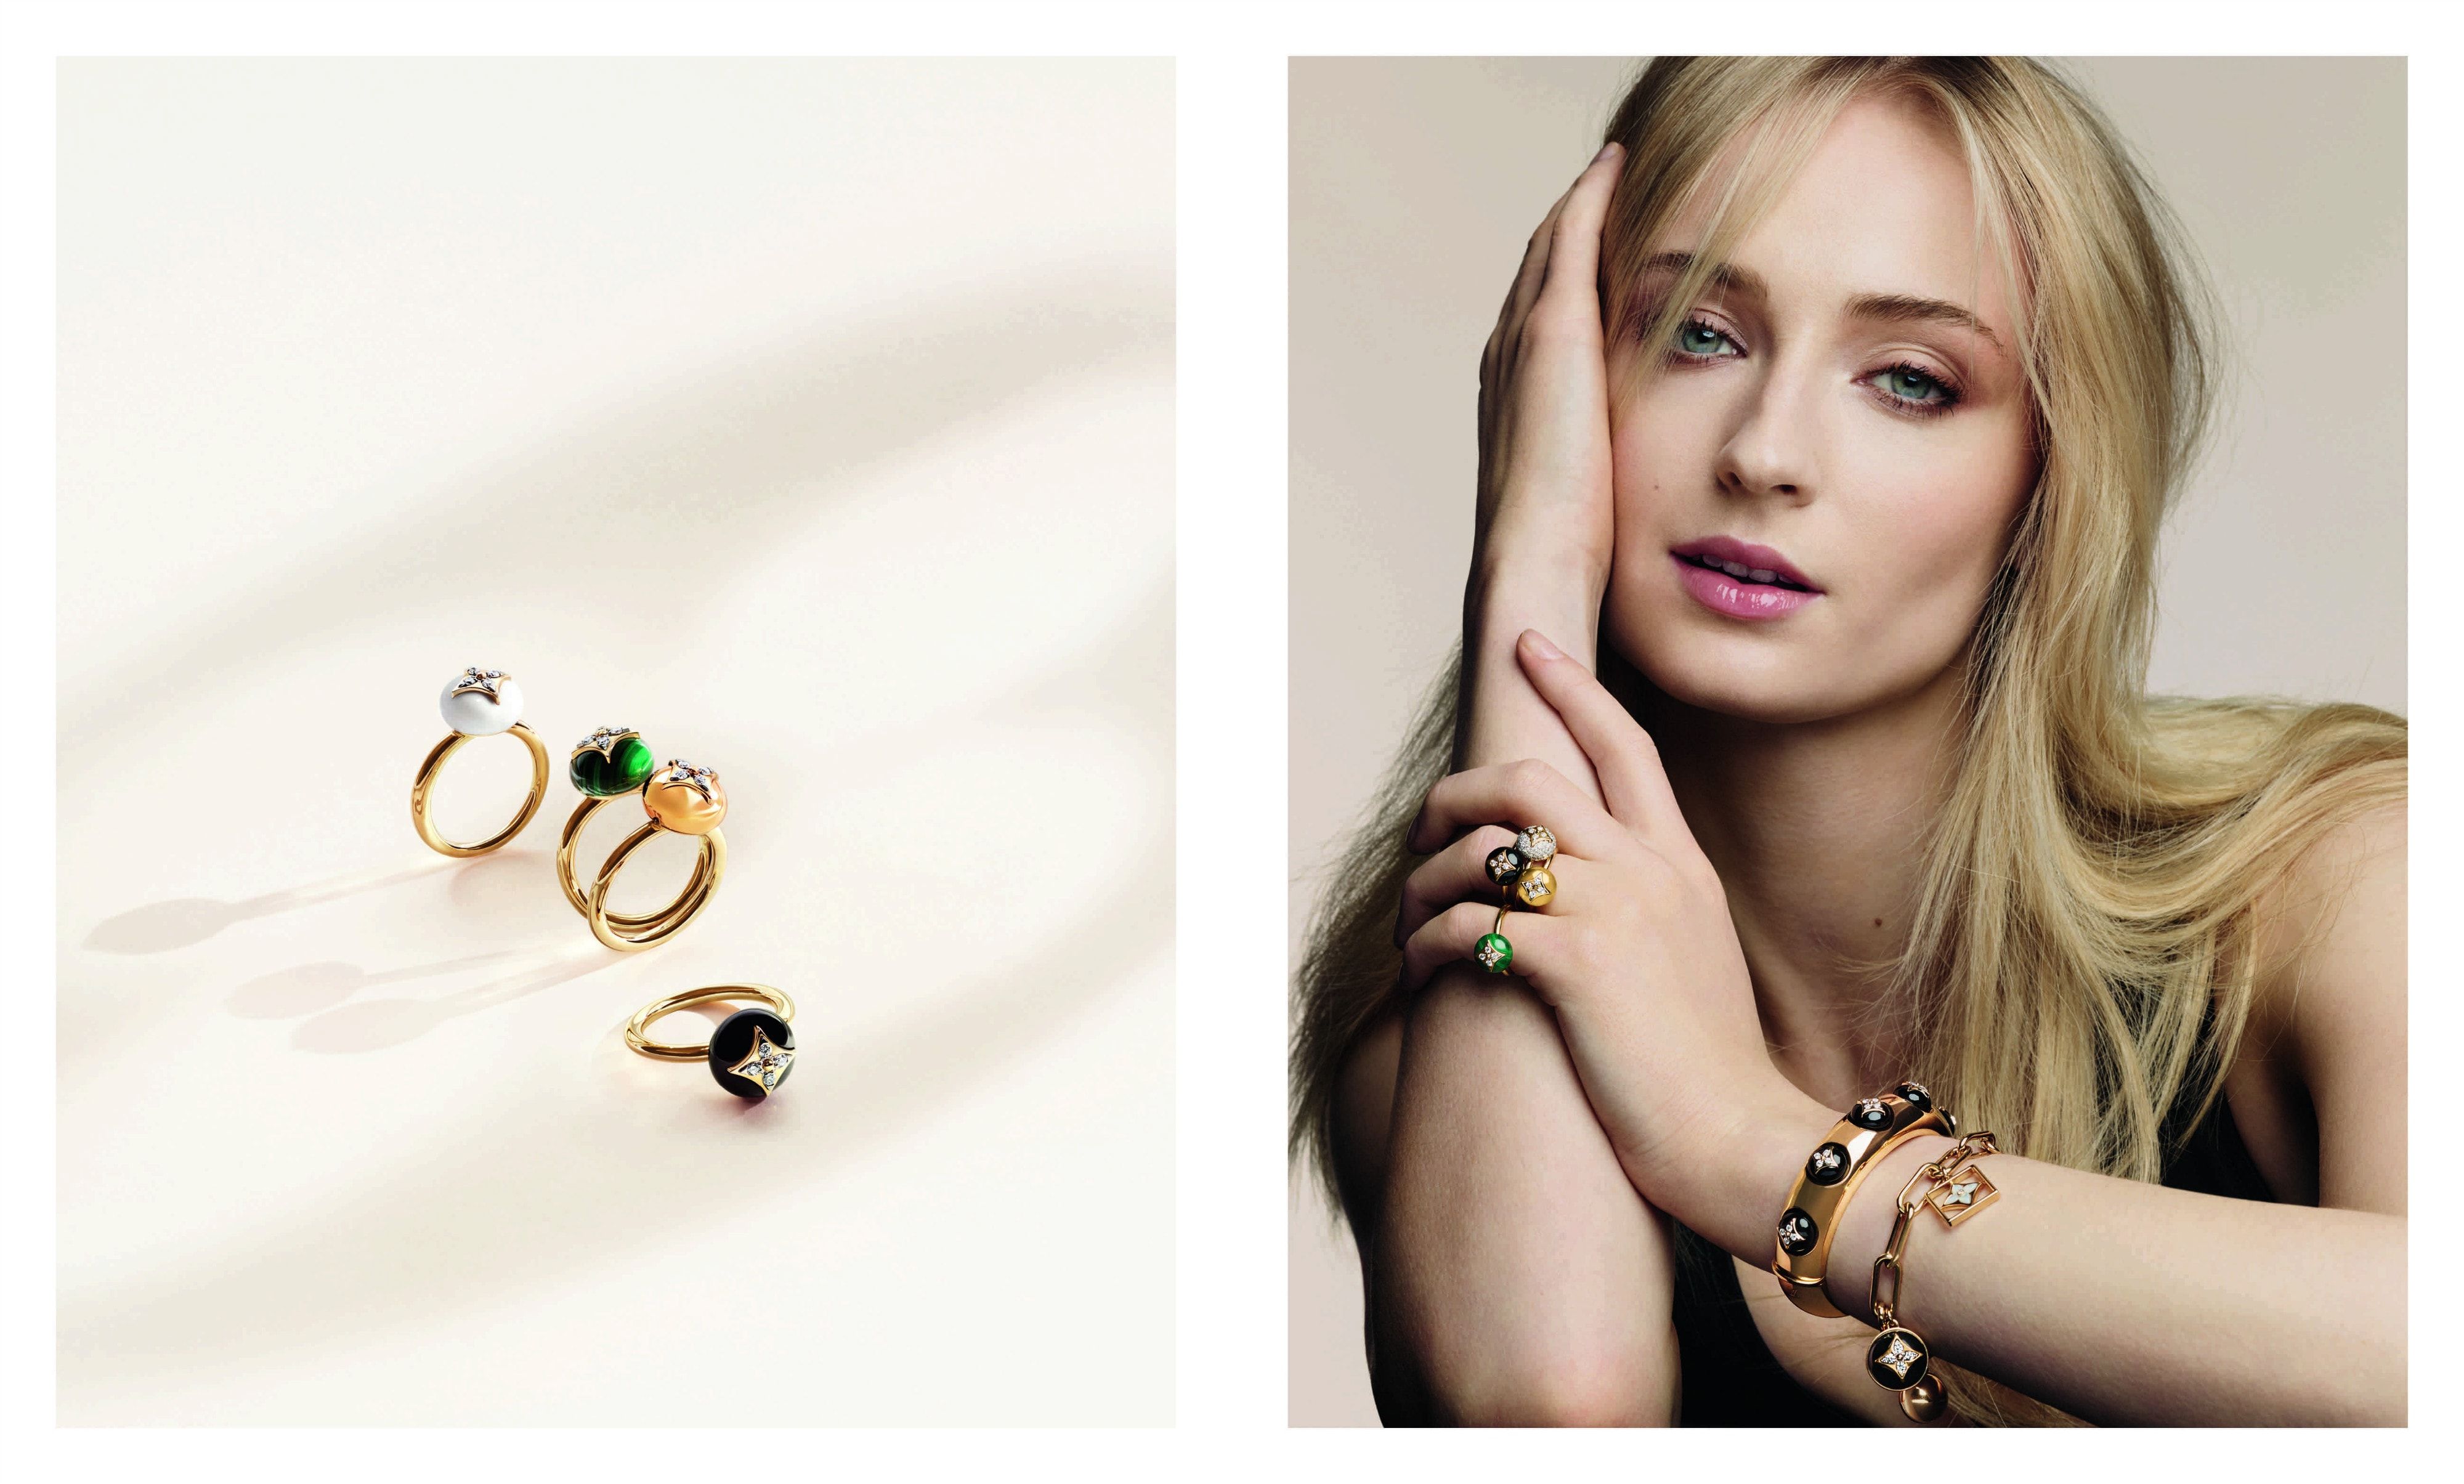 Louis Vuitton Mixed Gold and Diamond B Blossom Bracelet